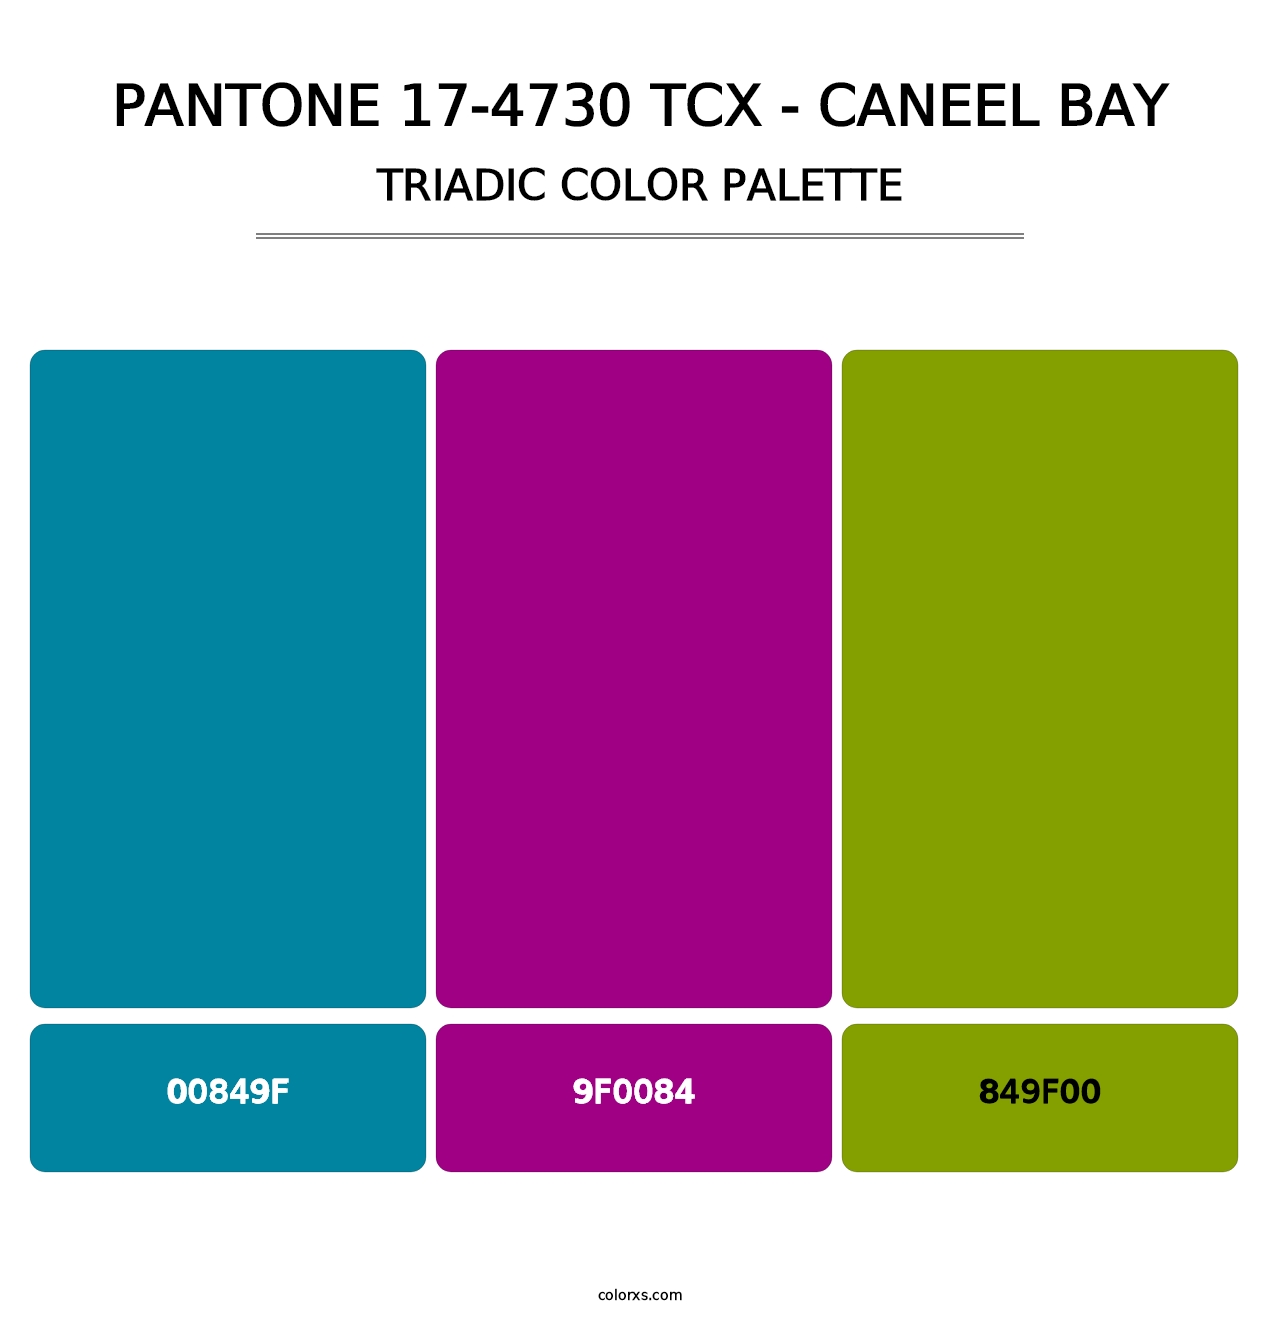 PANTONE 17-4730 TCX - Caneel Bay - Triadic Color Palette